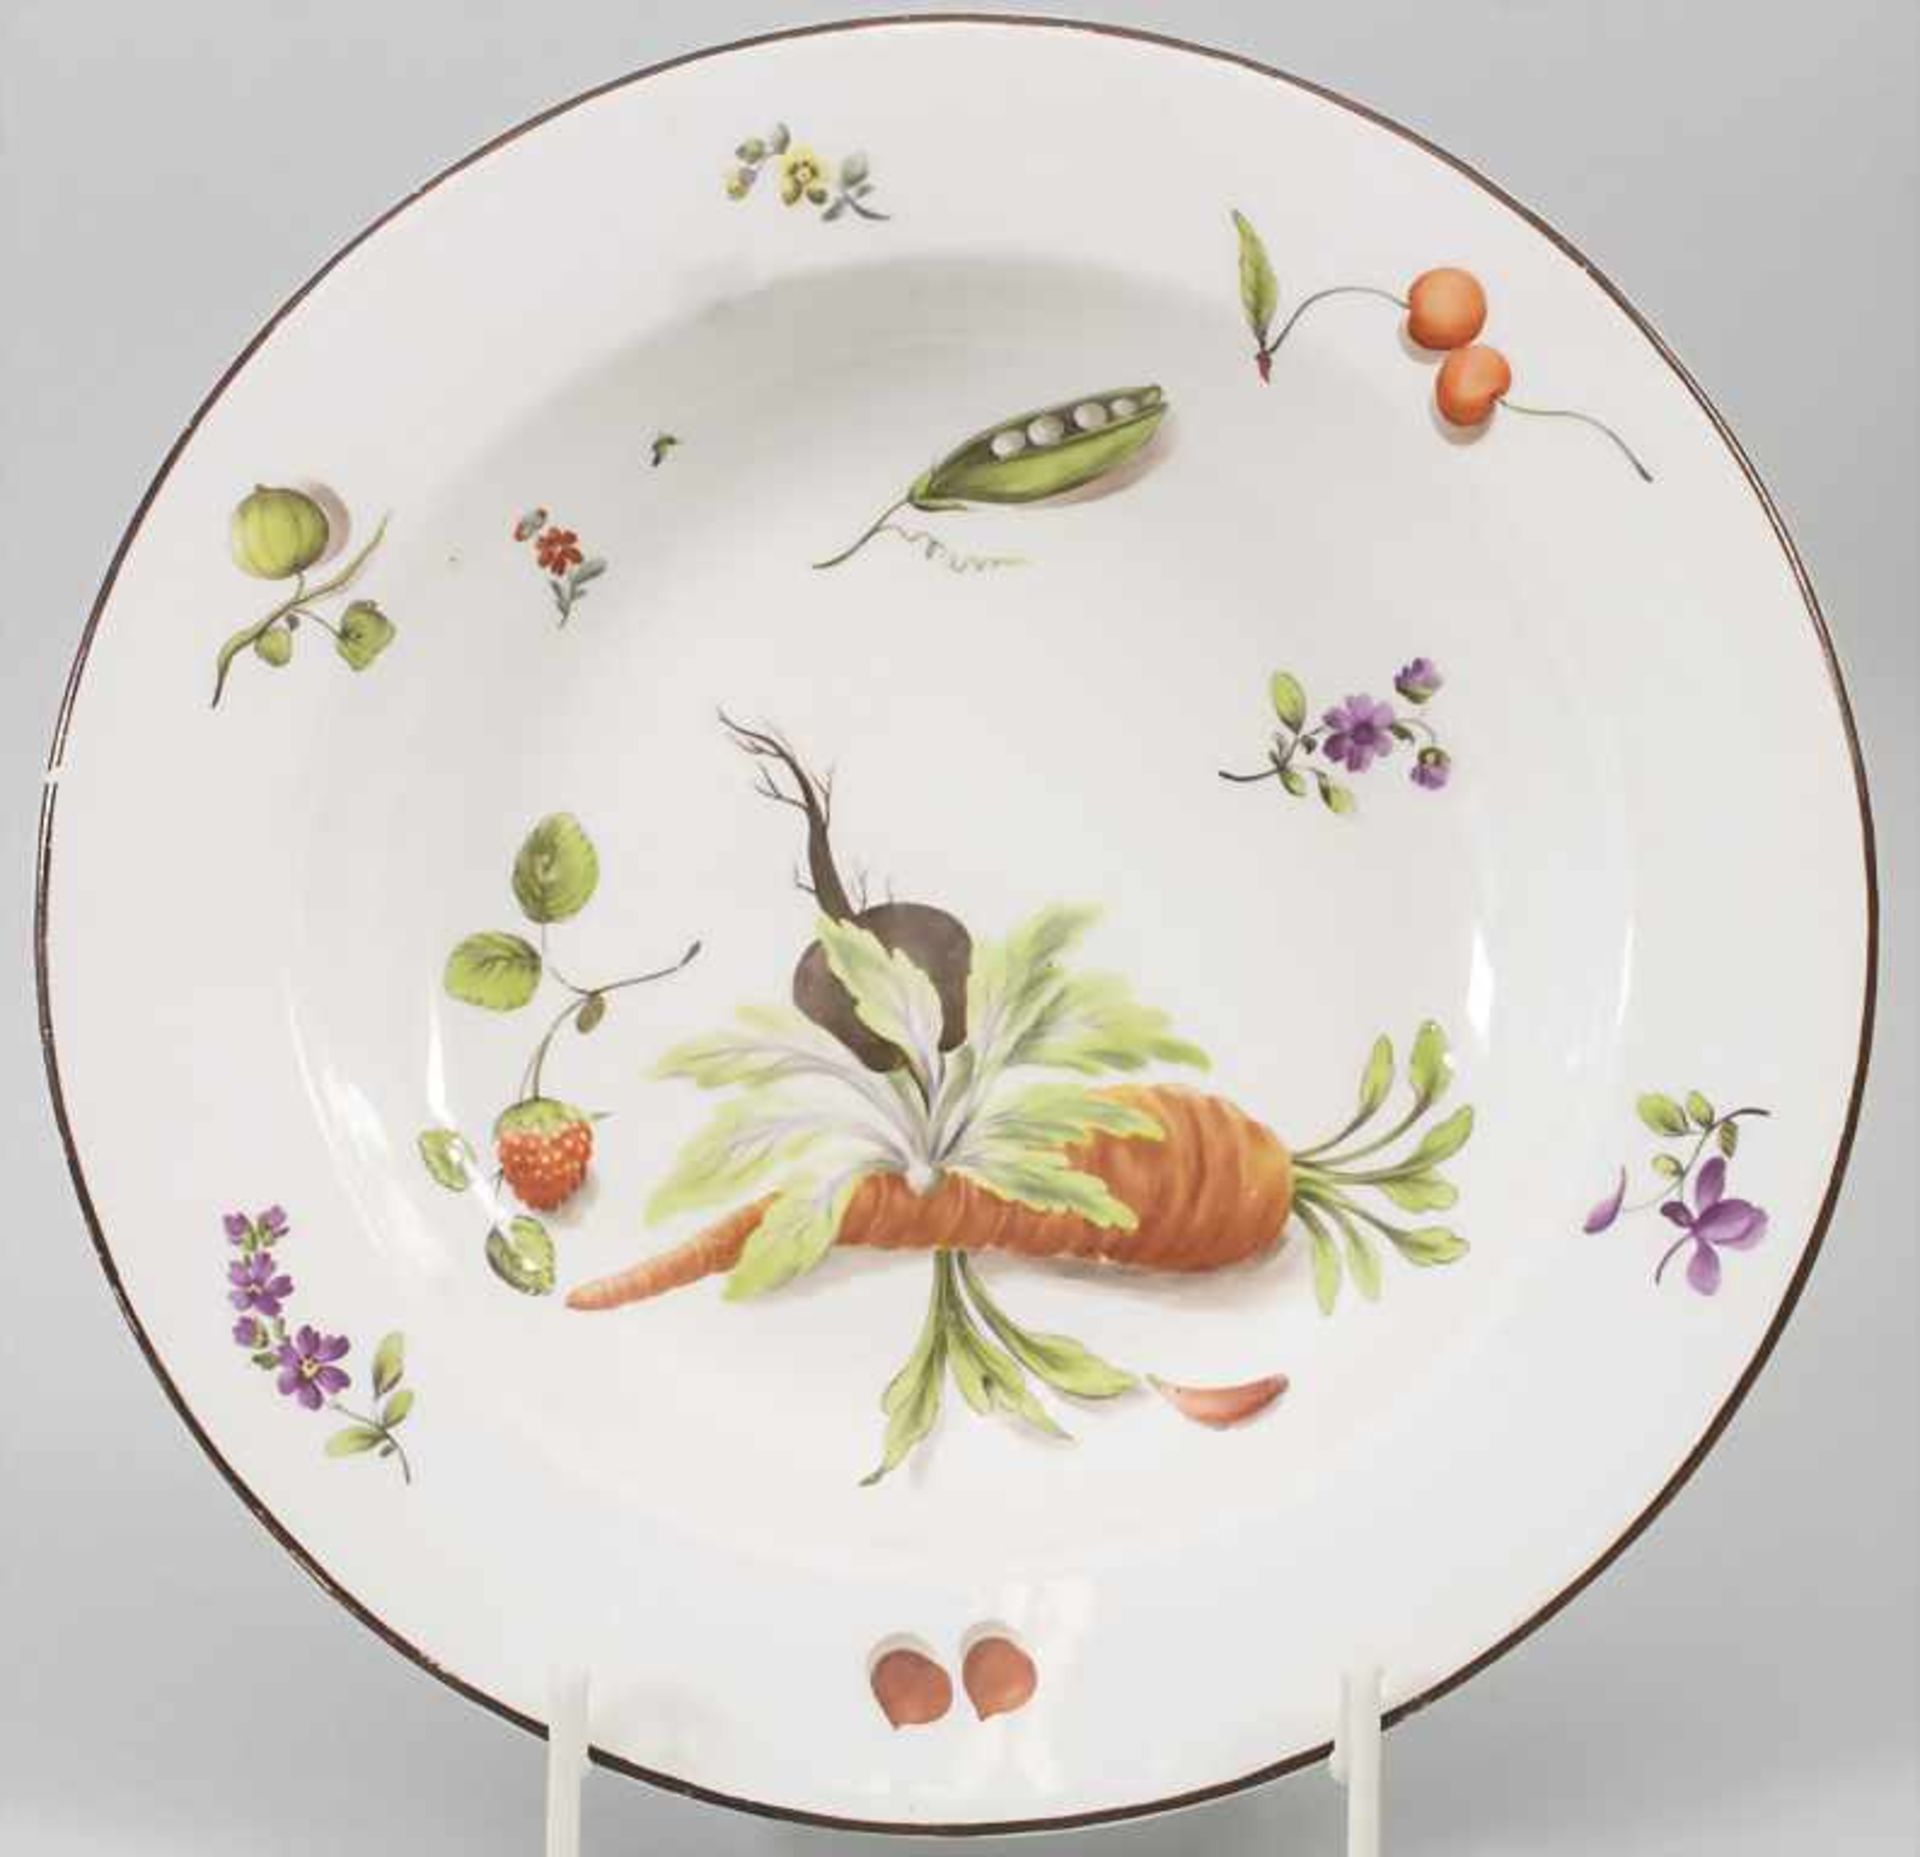 Suppenteller mit Gemüse-Dekor / A soup plate painted with vegetables, fruits and flowers, Wien, um